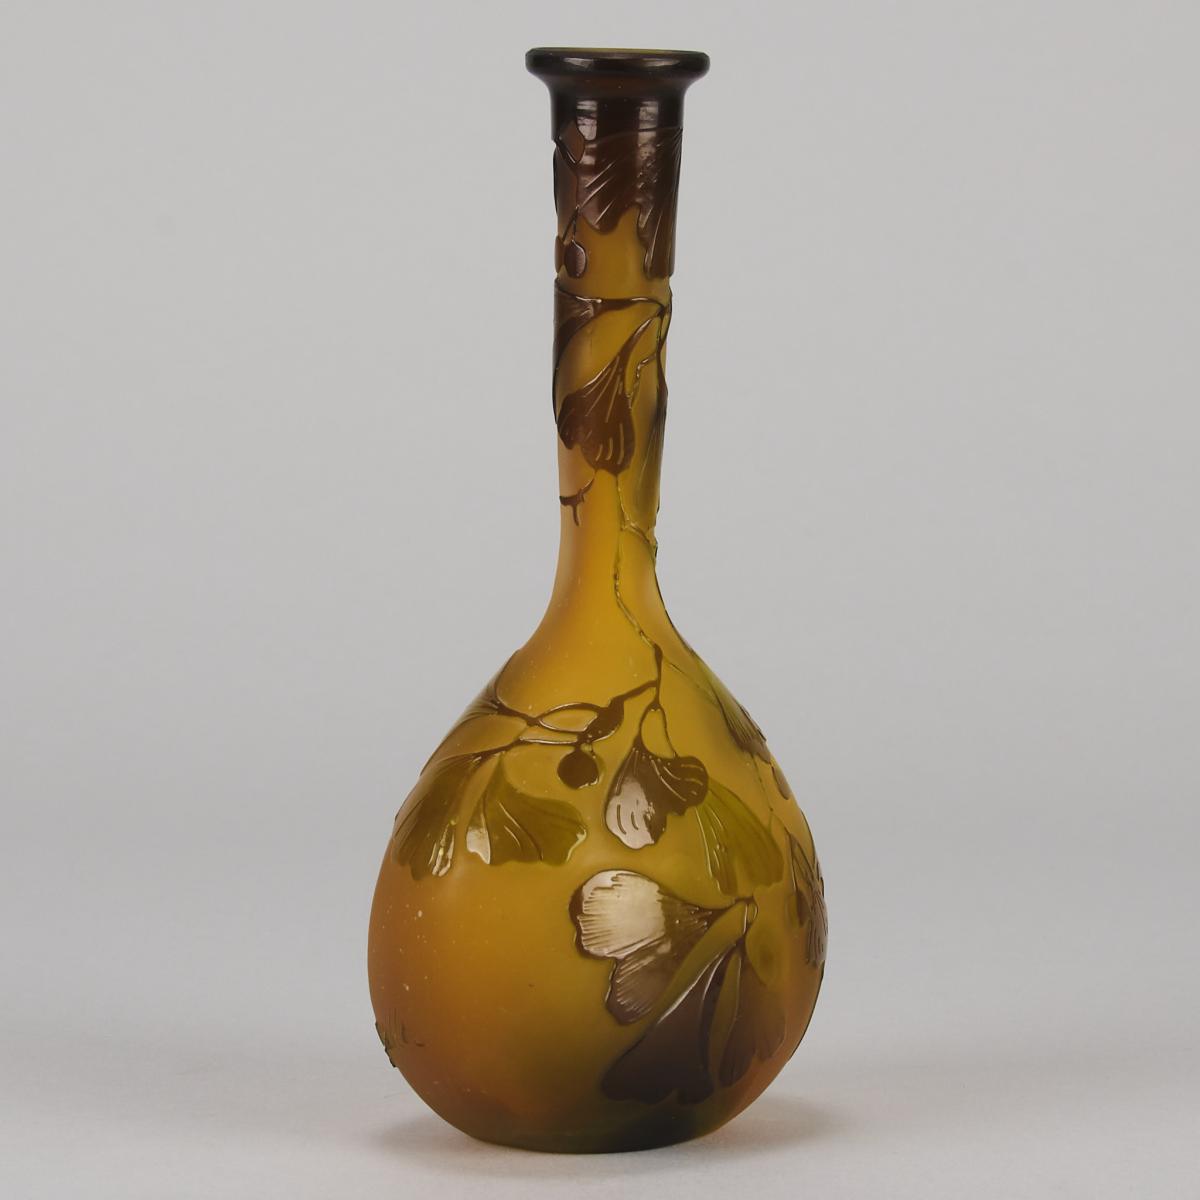 Early 20th Century Art Nouveau Vase entitled "Floral Banjo Vase" by Emile Galle